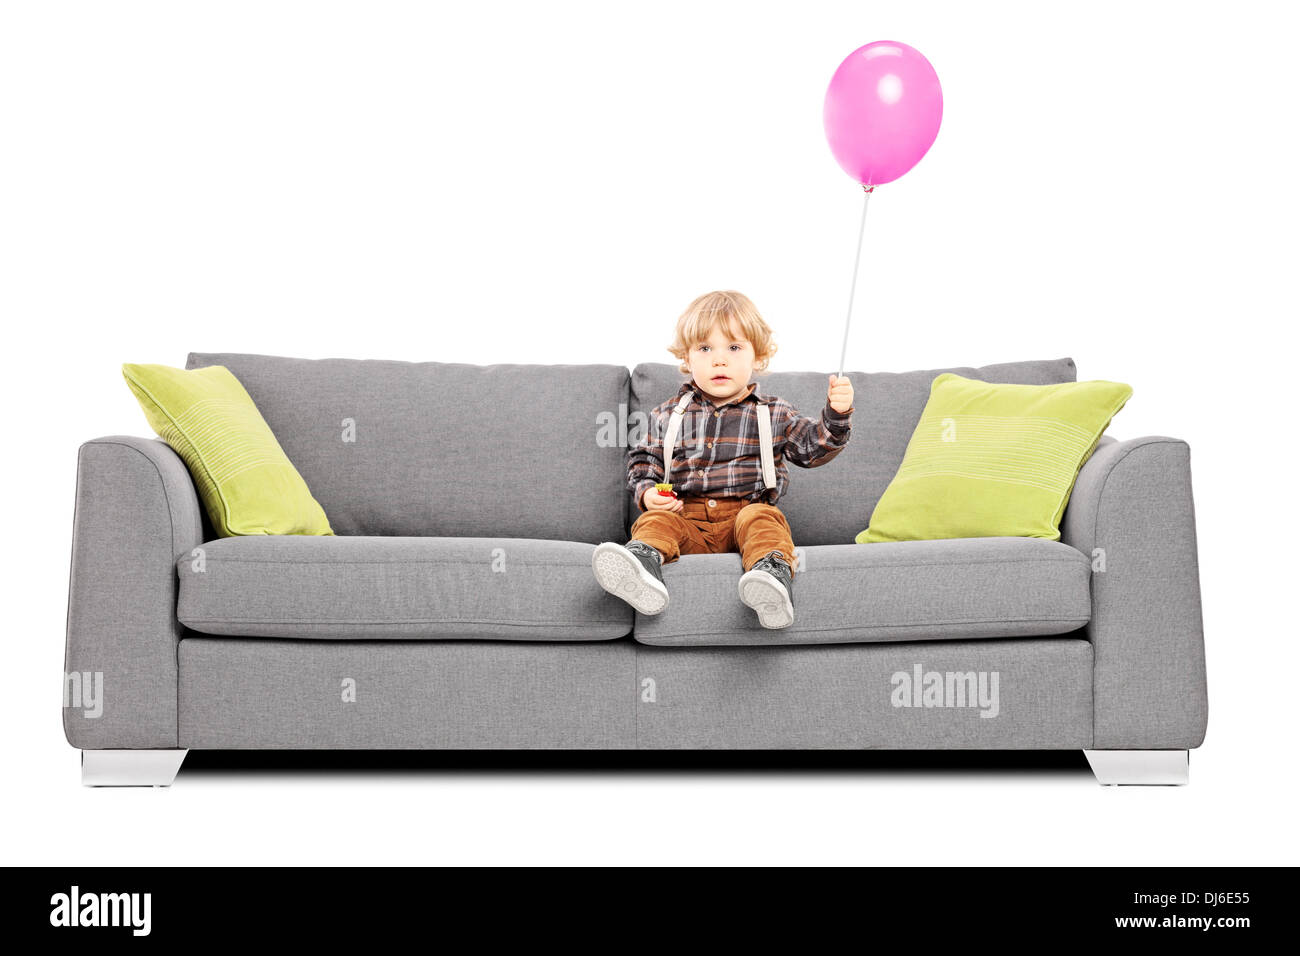 Cute little boy sitting on sofa with a hot air balloon Stock Photo